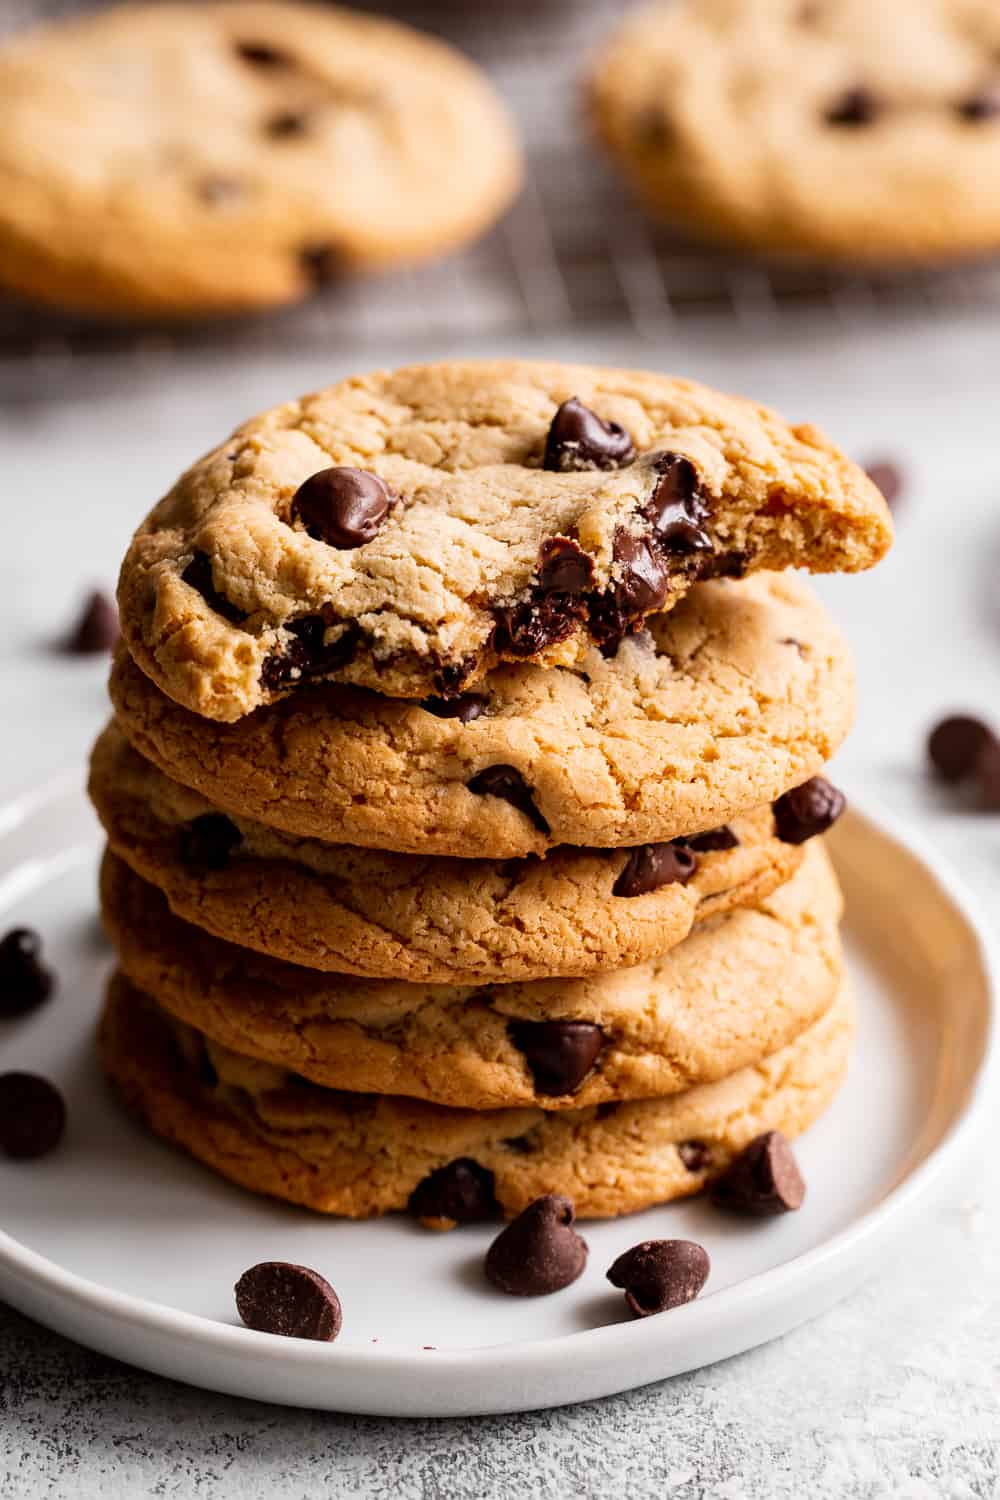 https://www.paleorunningmomma.com/wp-content/uploads/2022/02/favorite-chocolate-chip-cookies-10.jpg